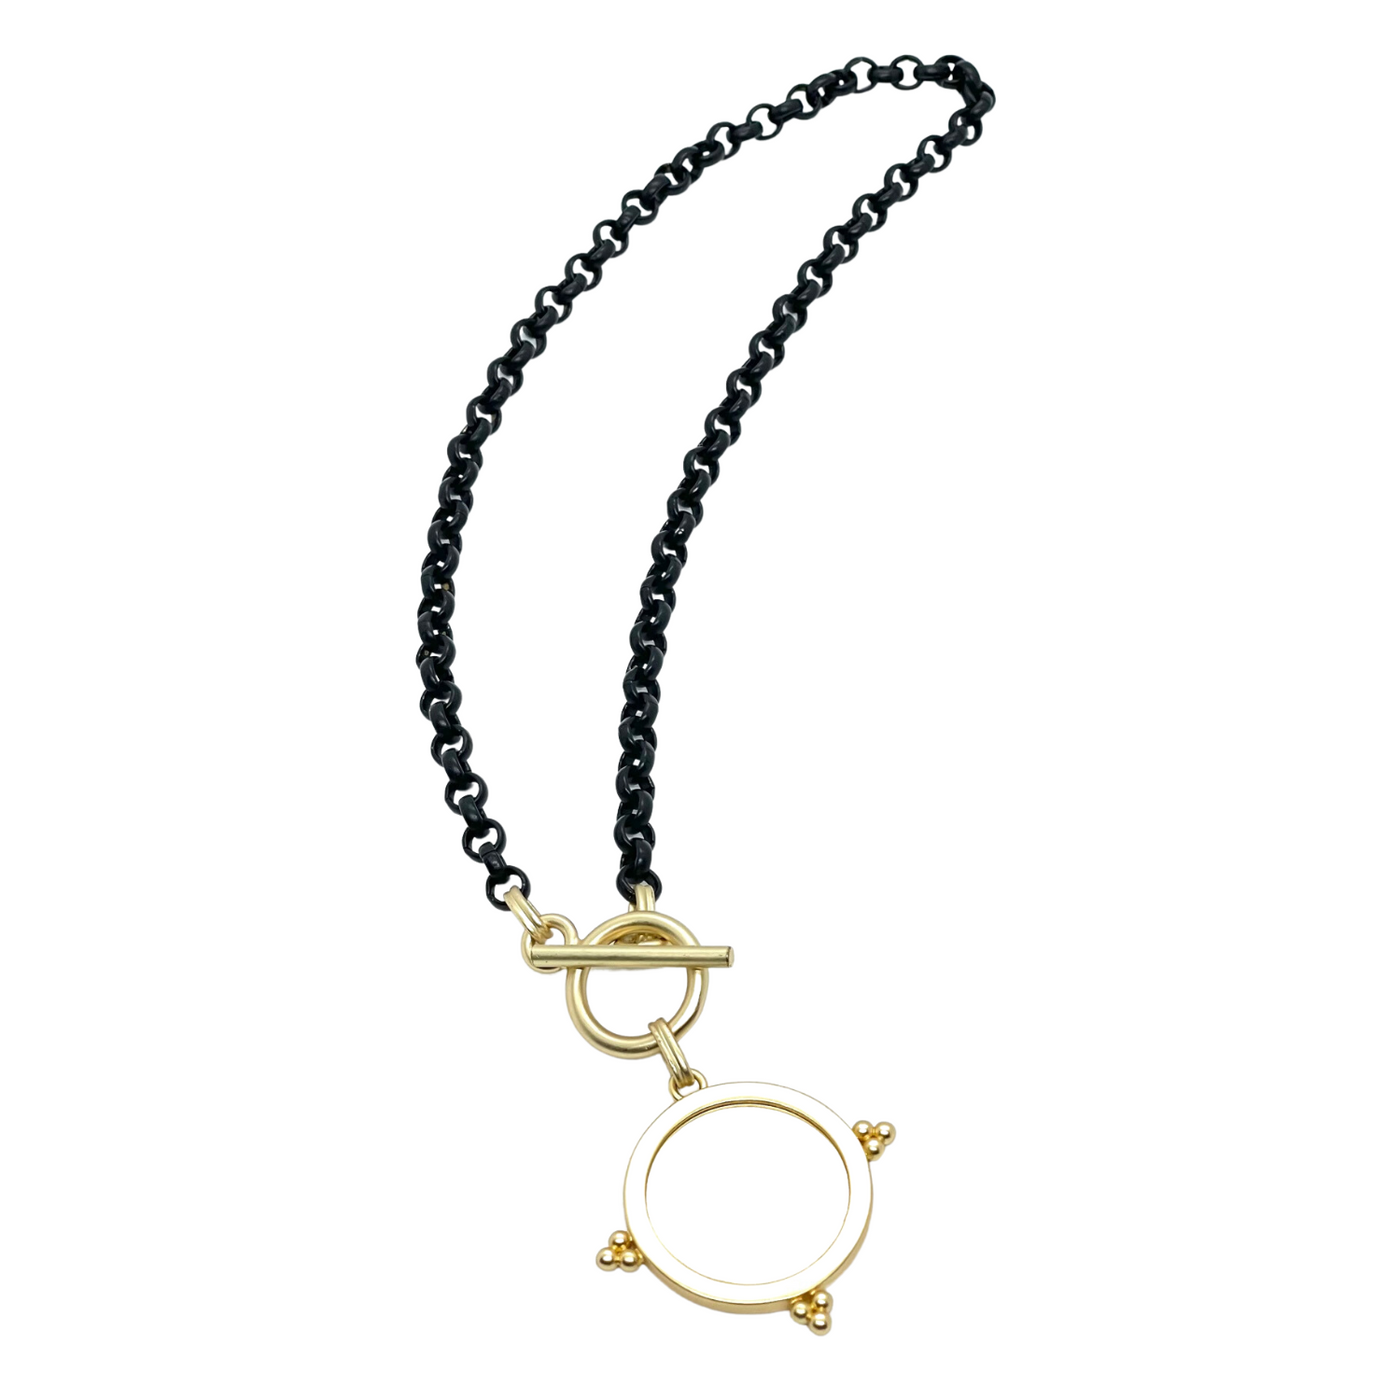 Starburst Pendant on Matte Black Chain Necklace